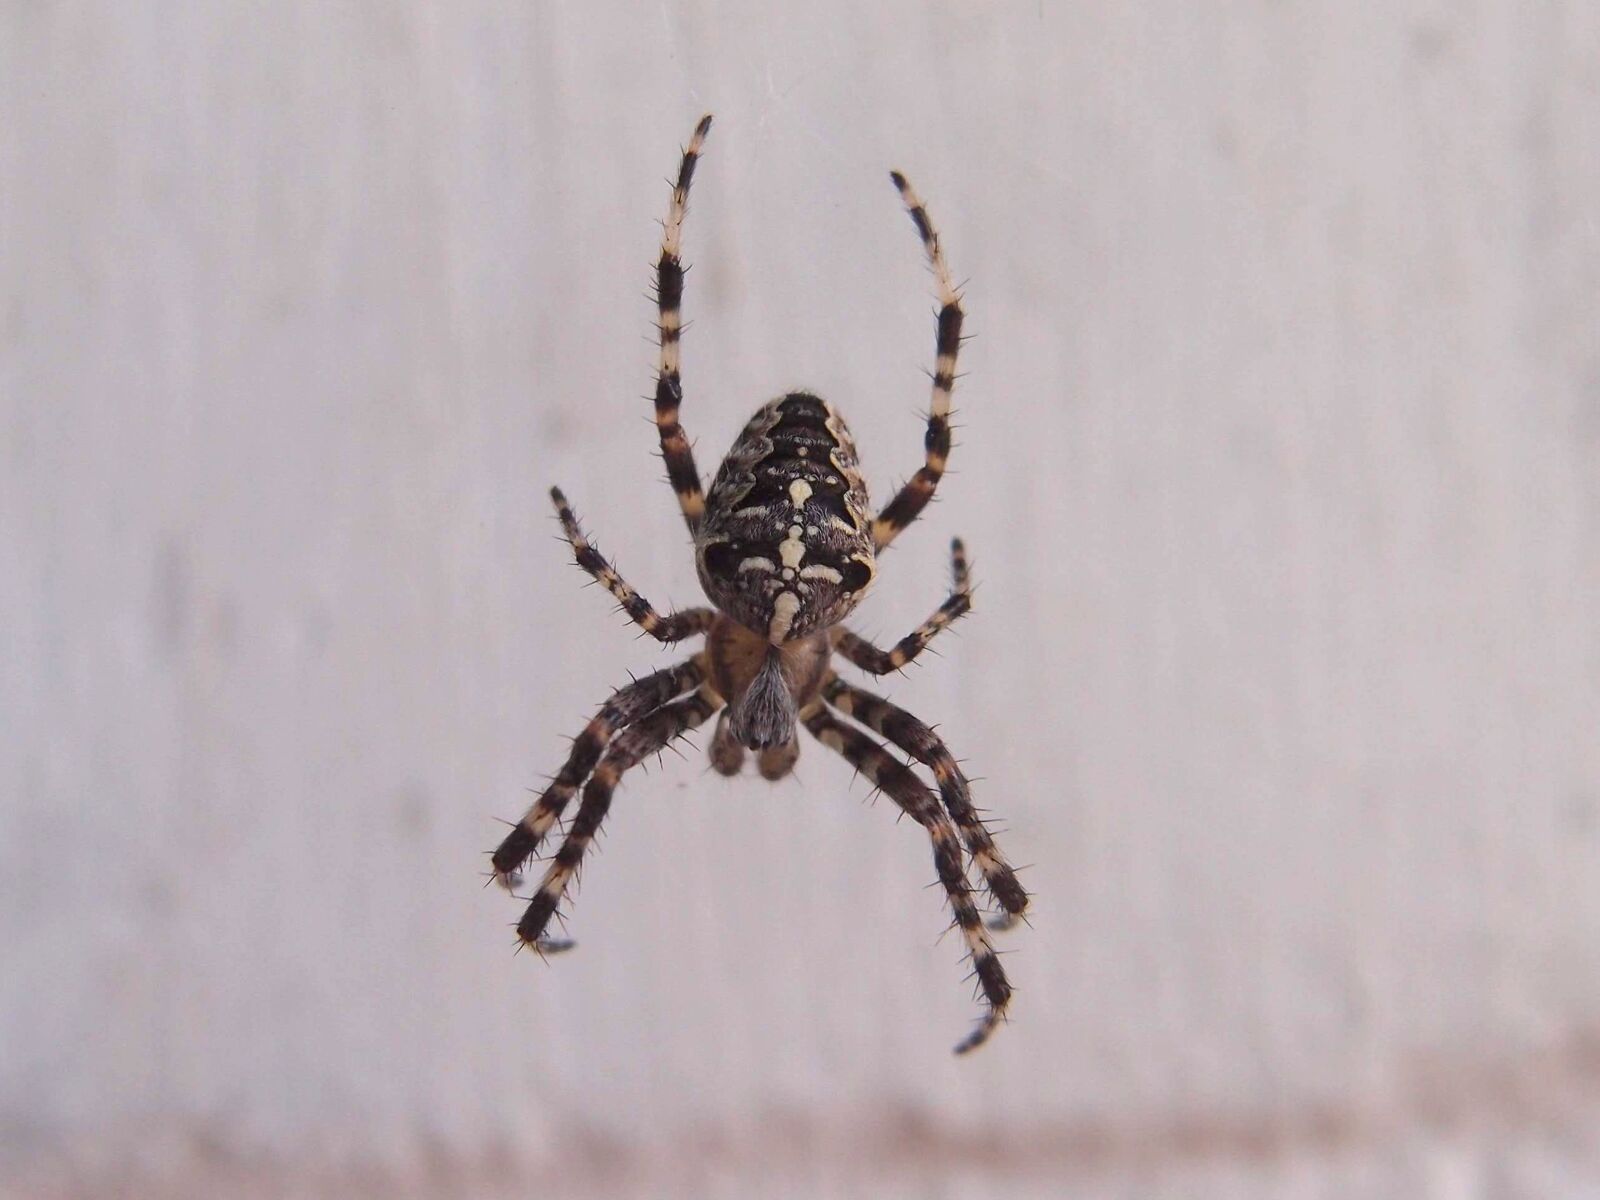 Olympus XZ-1 sample photo. Spider, summer, dacha photography